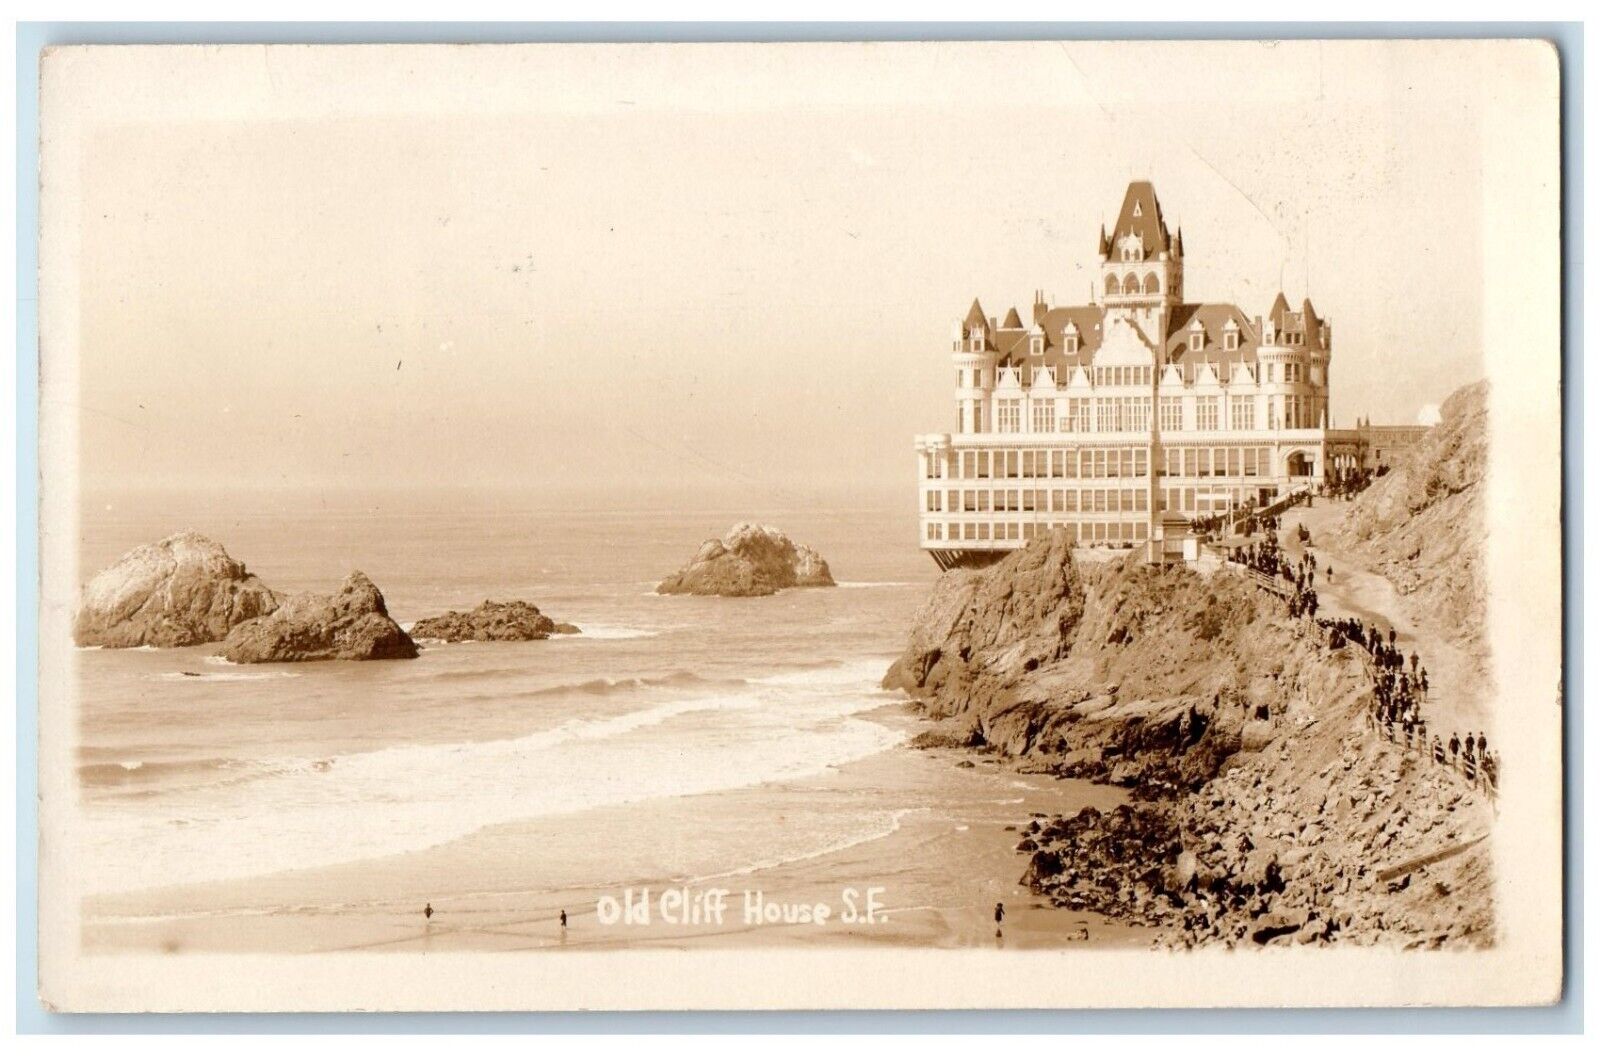 1927 Old Cliff House Beach Ocean San Francisco California CA RPPC Photo Postcard